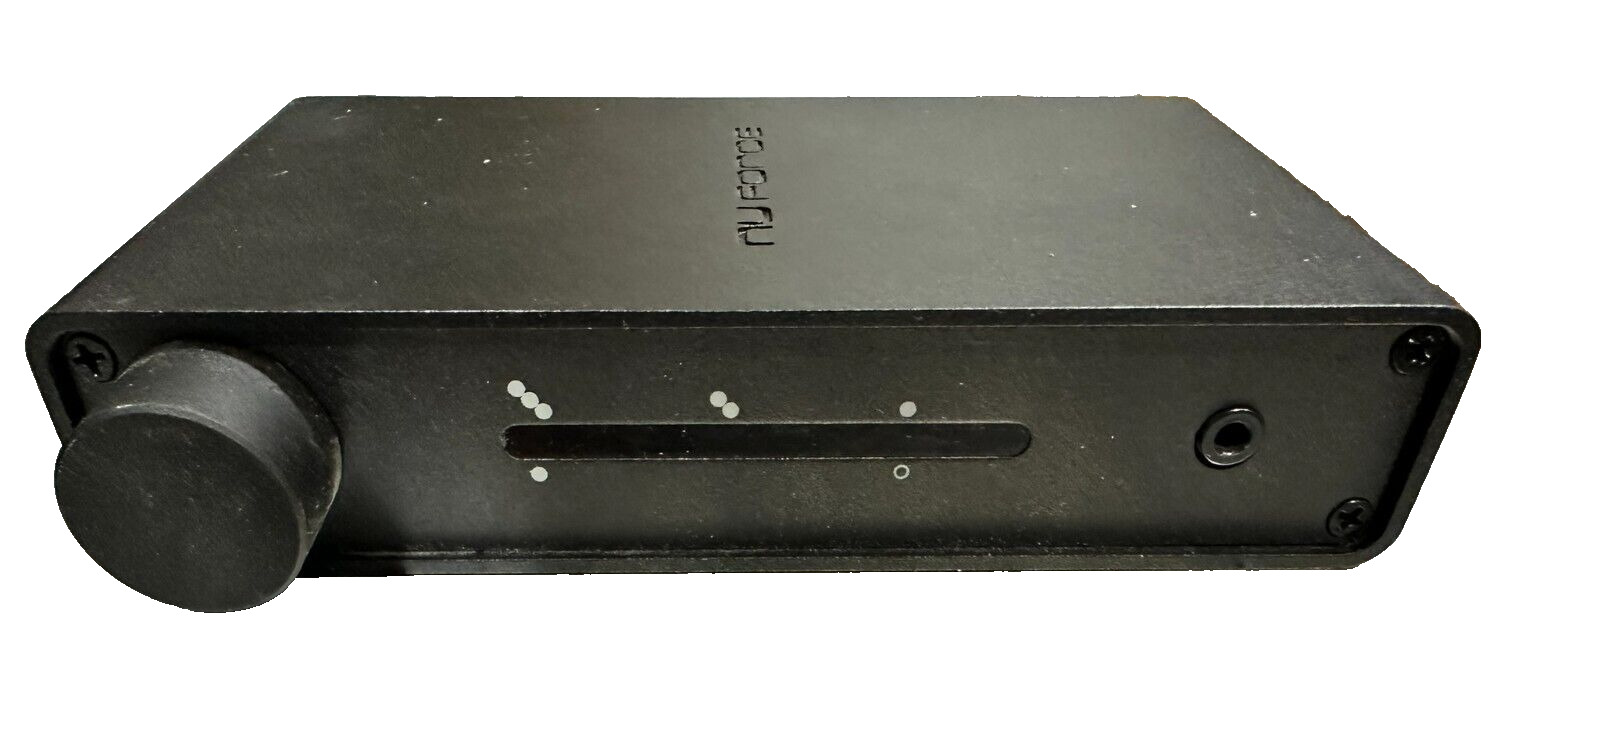 Nuforce DIA-BLACK Digital Input Amplifier (incl power adapter & remote)